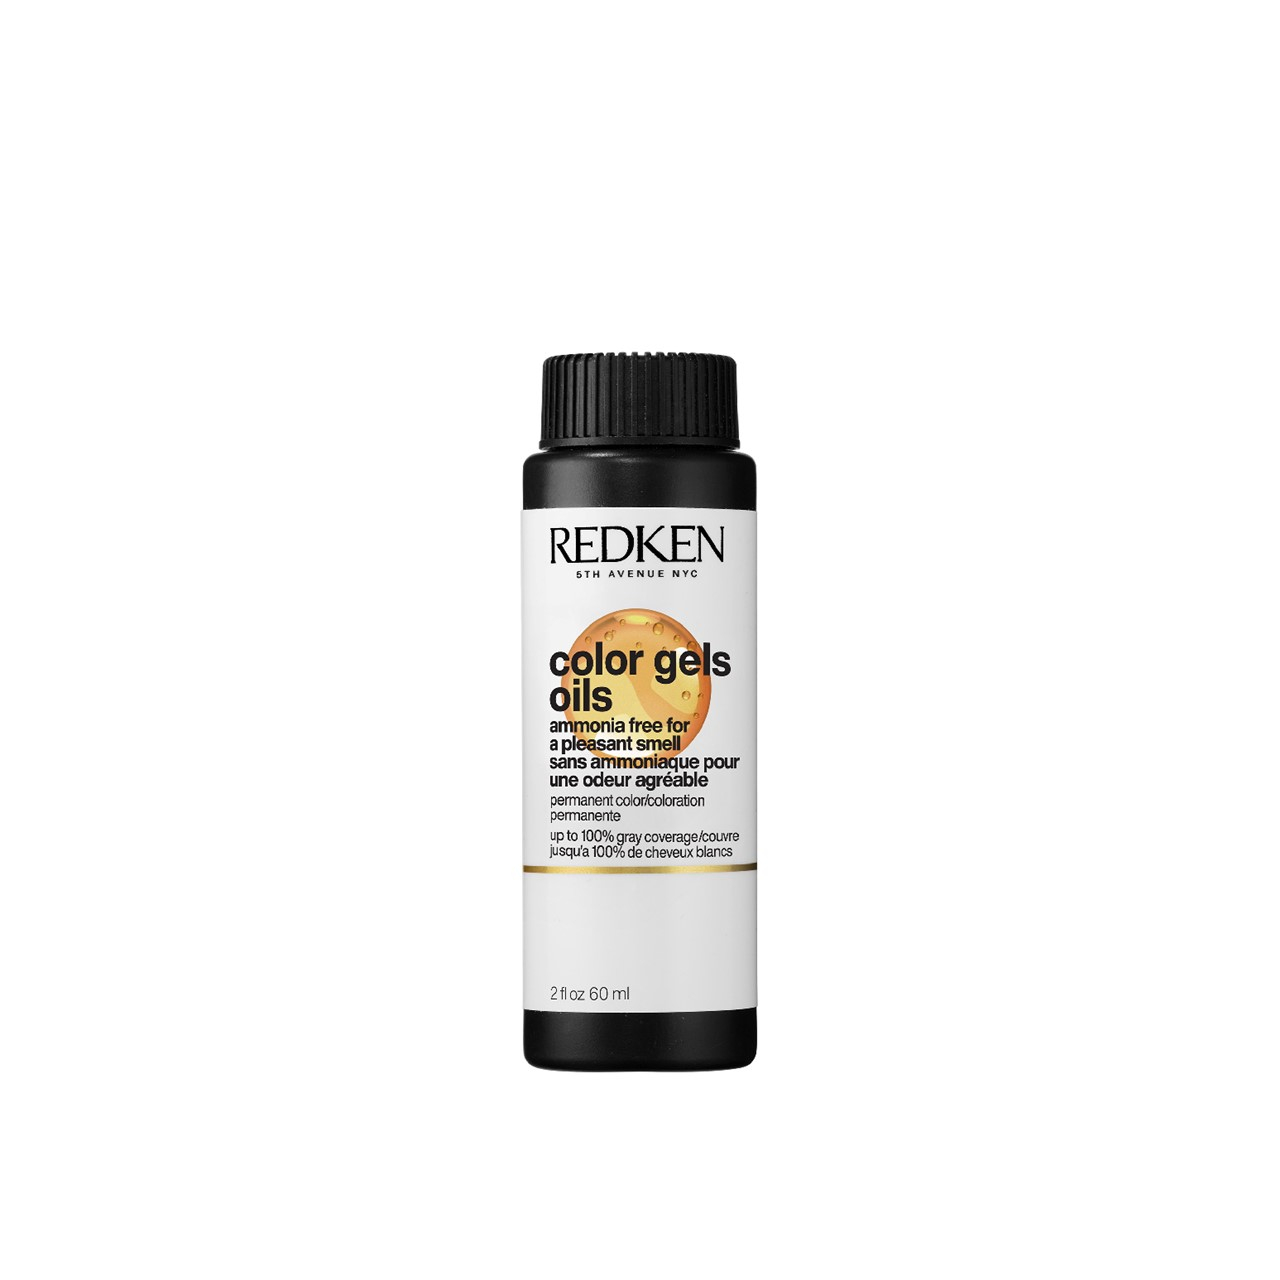 Redken Color Gels Oils 9BC Clay Permanent Hair Dye 60ml (2.03 fl oz)